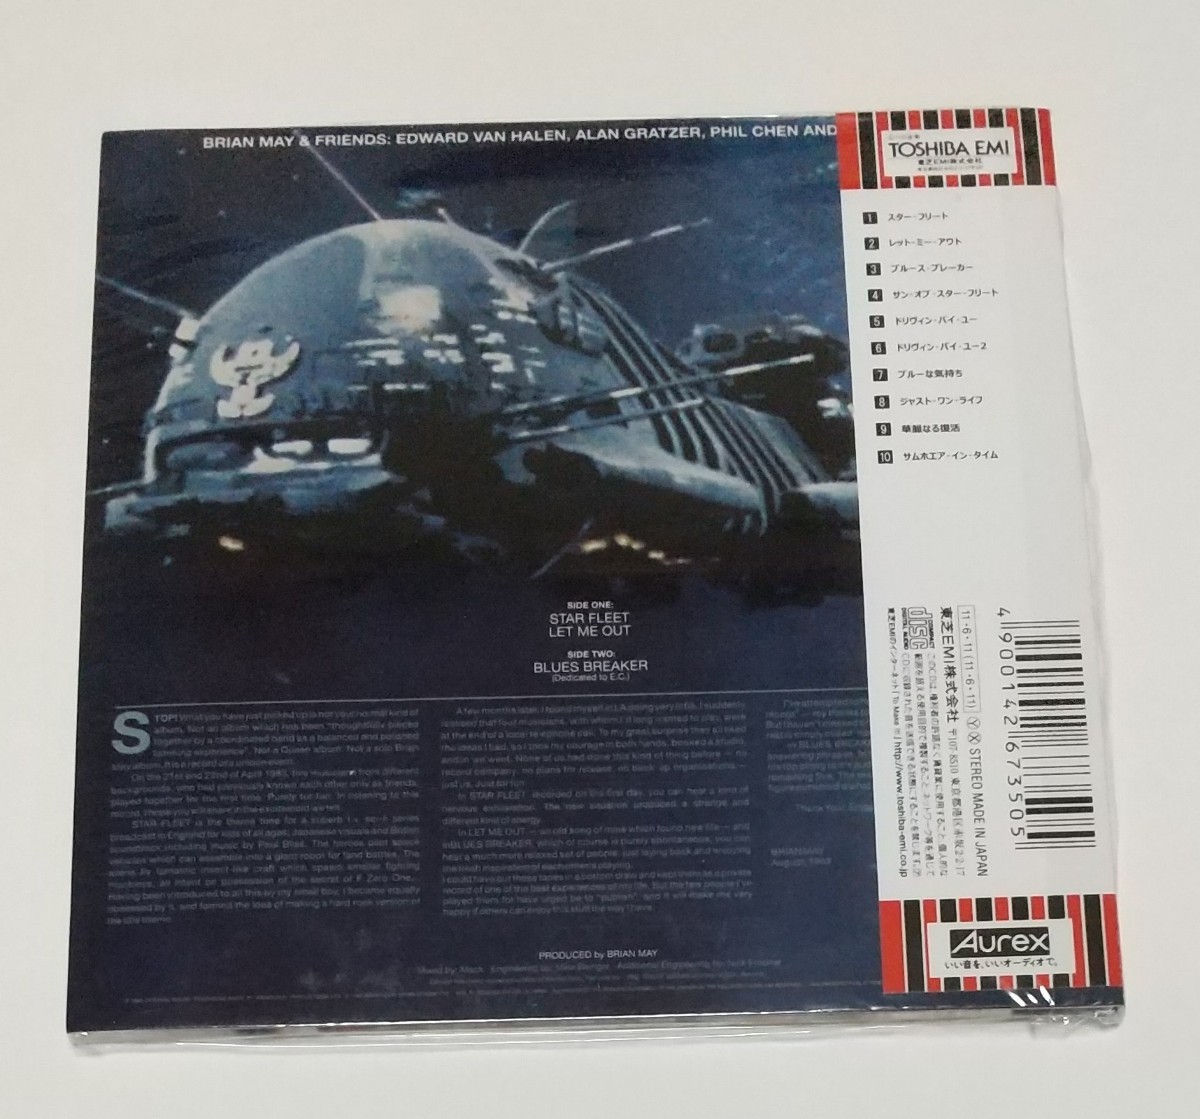 CD輸入盤リプロ盤 紙ジャケ BrianMay+Friends Star Fleet Project  スター・フリート